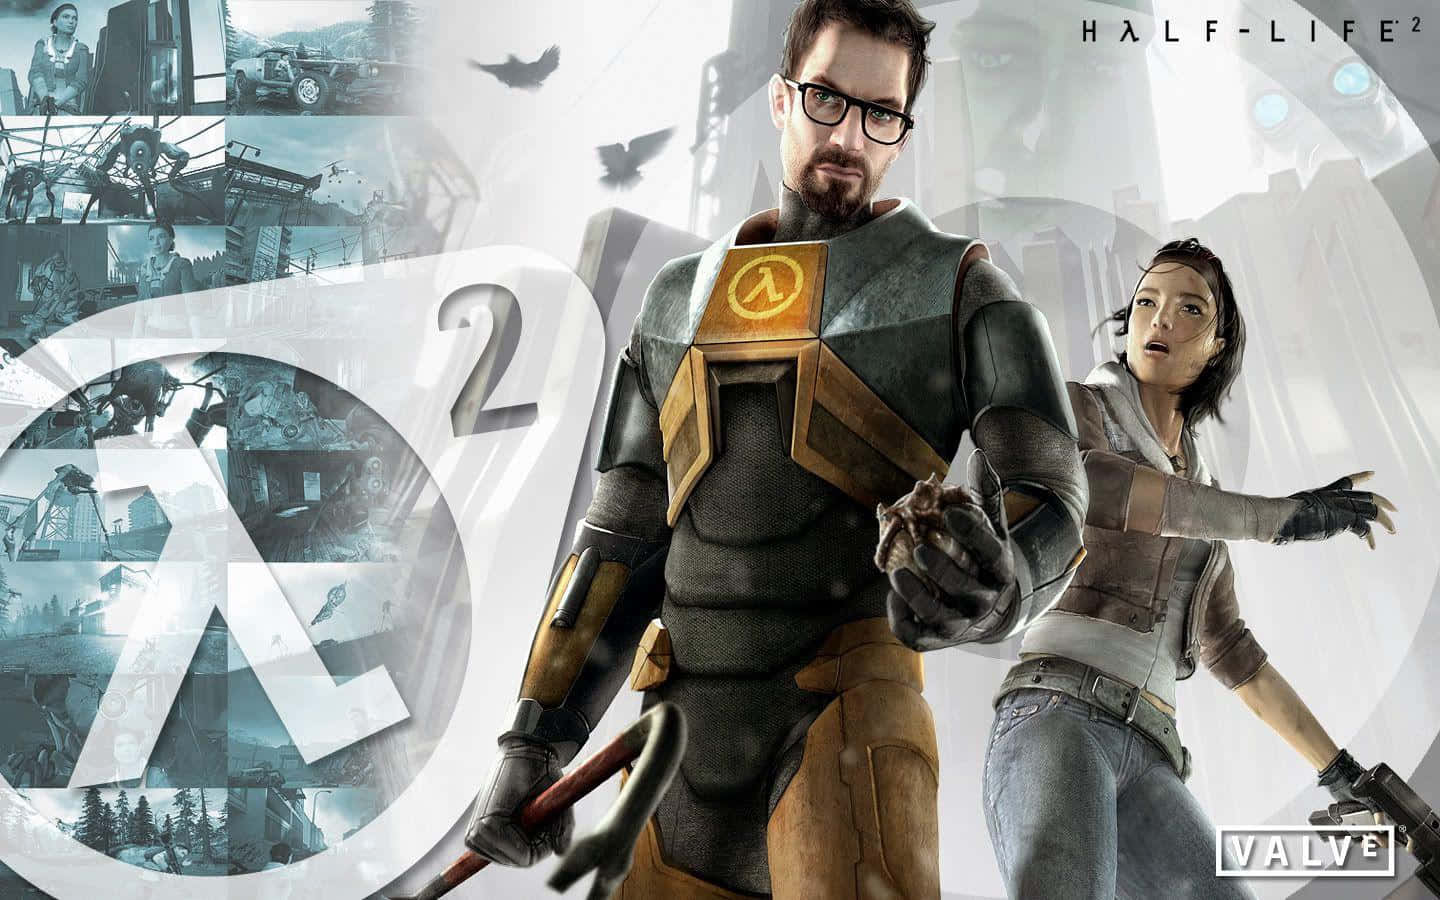 Explore City 17 with Alyx Vance and Gordon Freeman in Half-Life 2 Wallpaper